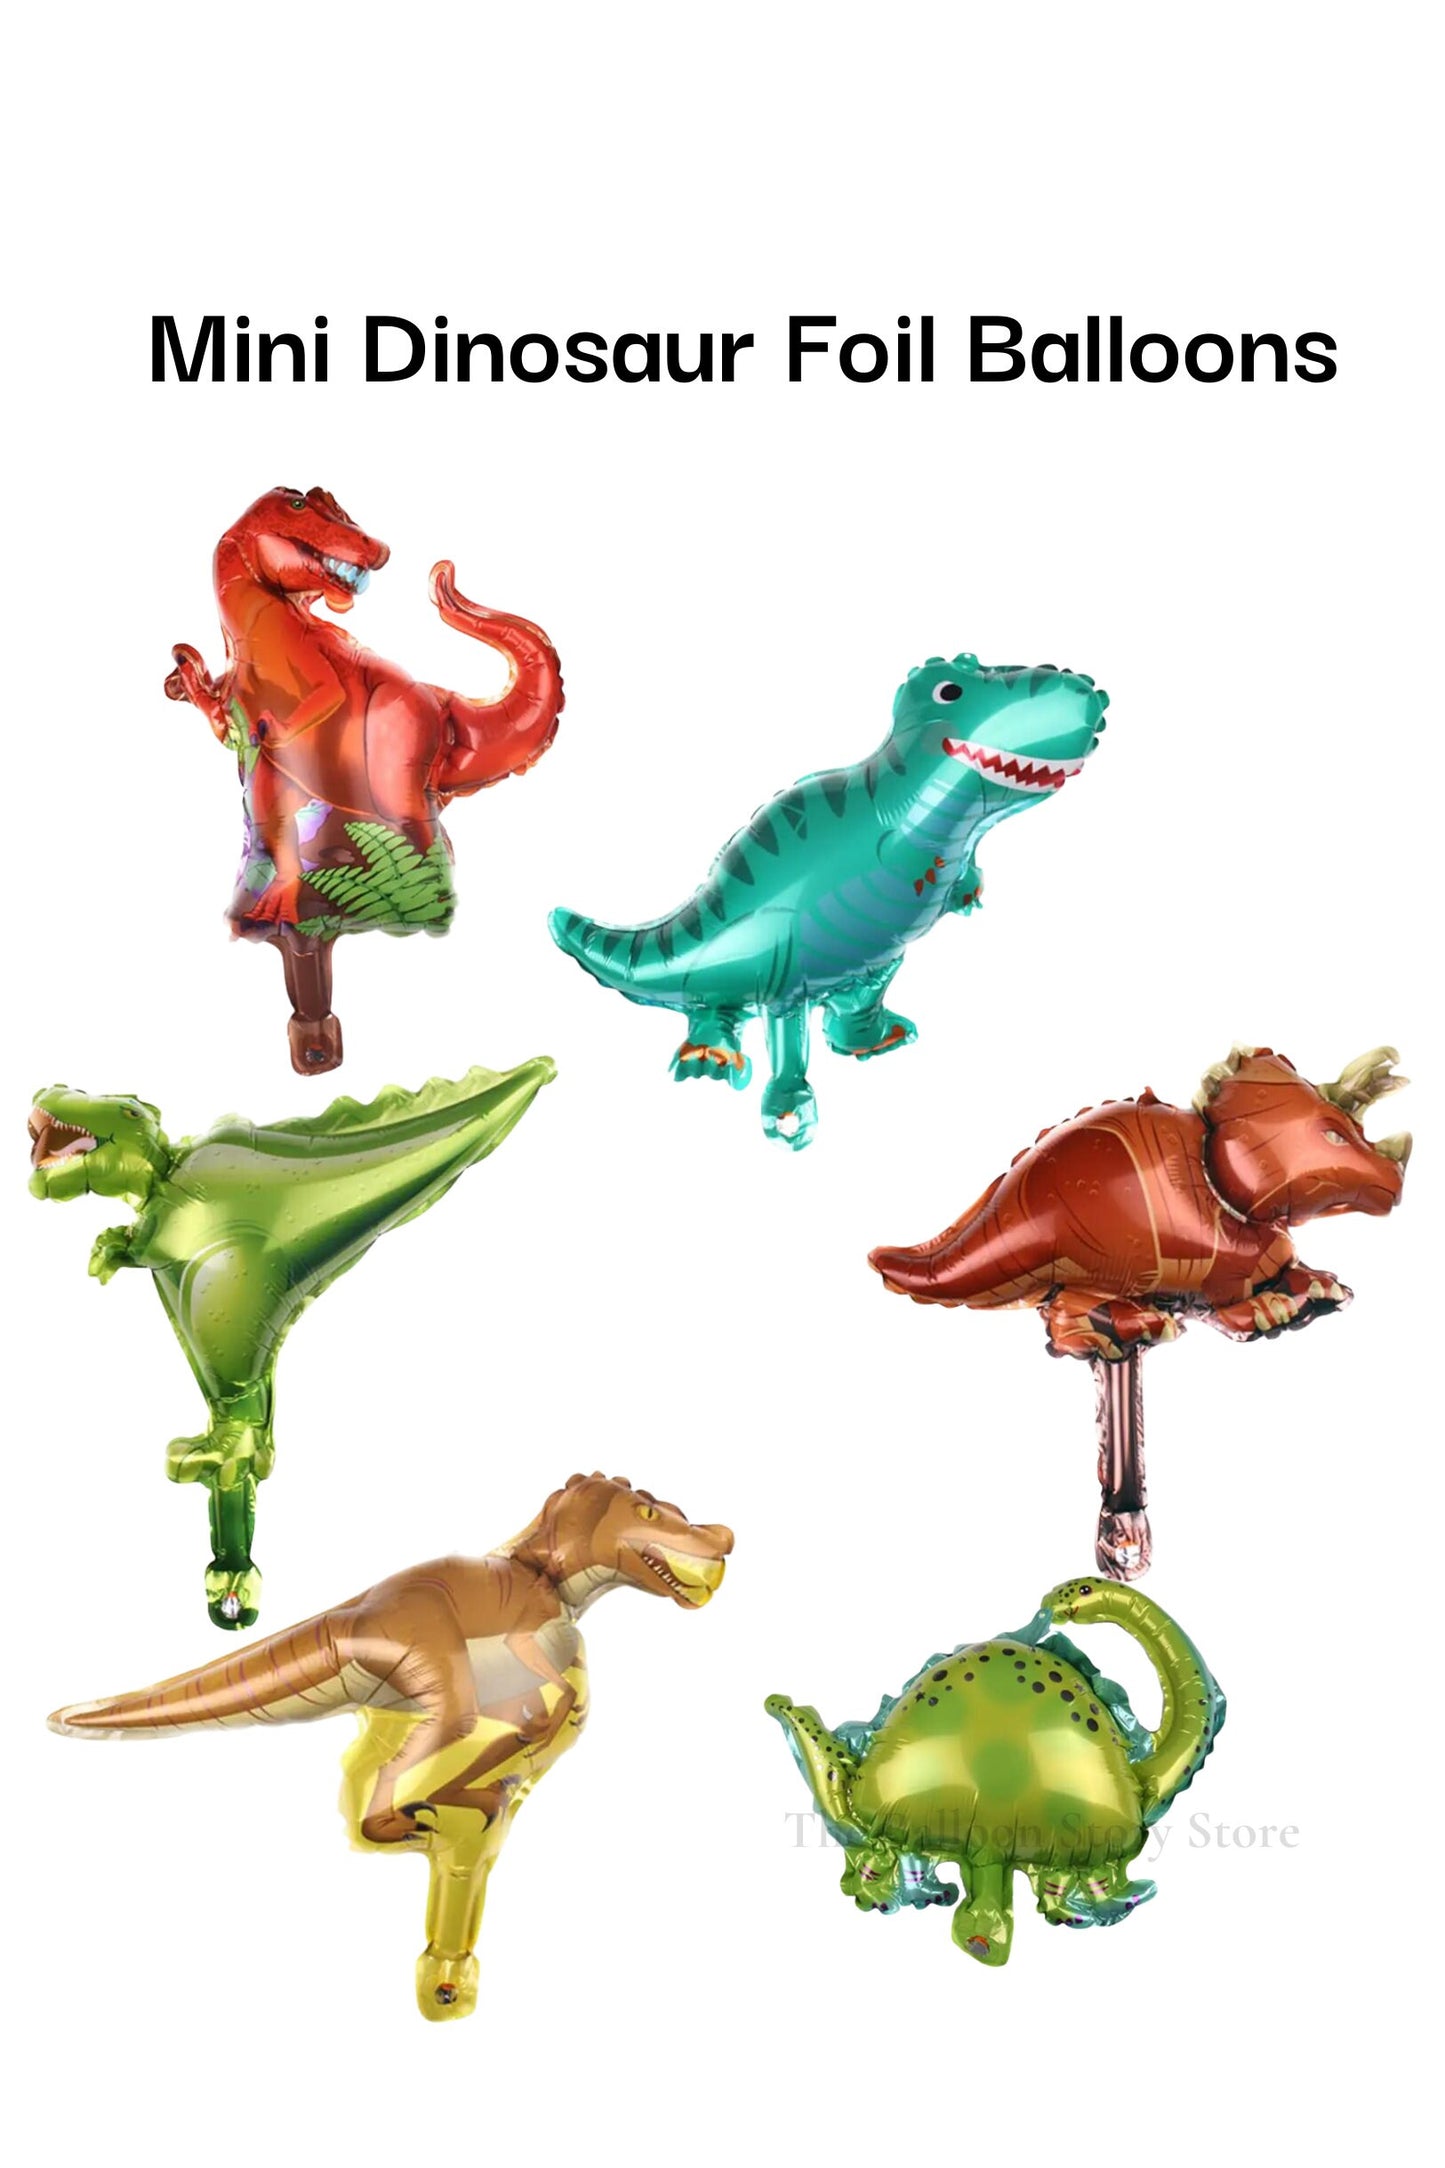 Mini Dinosaurs Foil Balloons